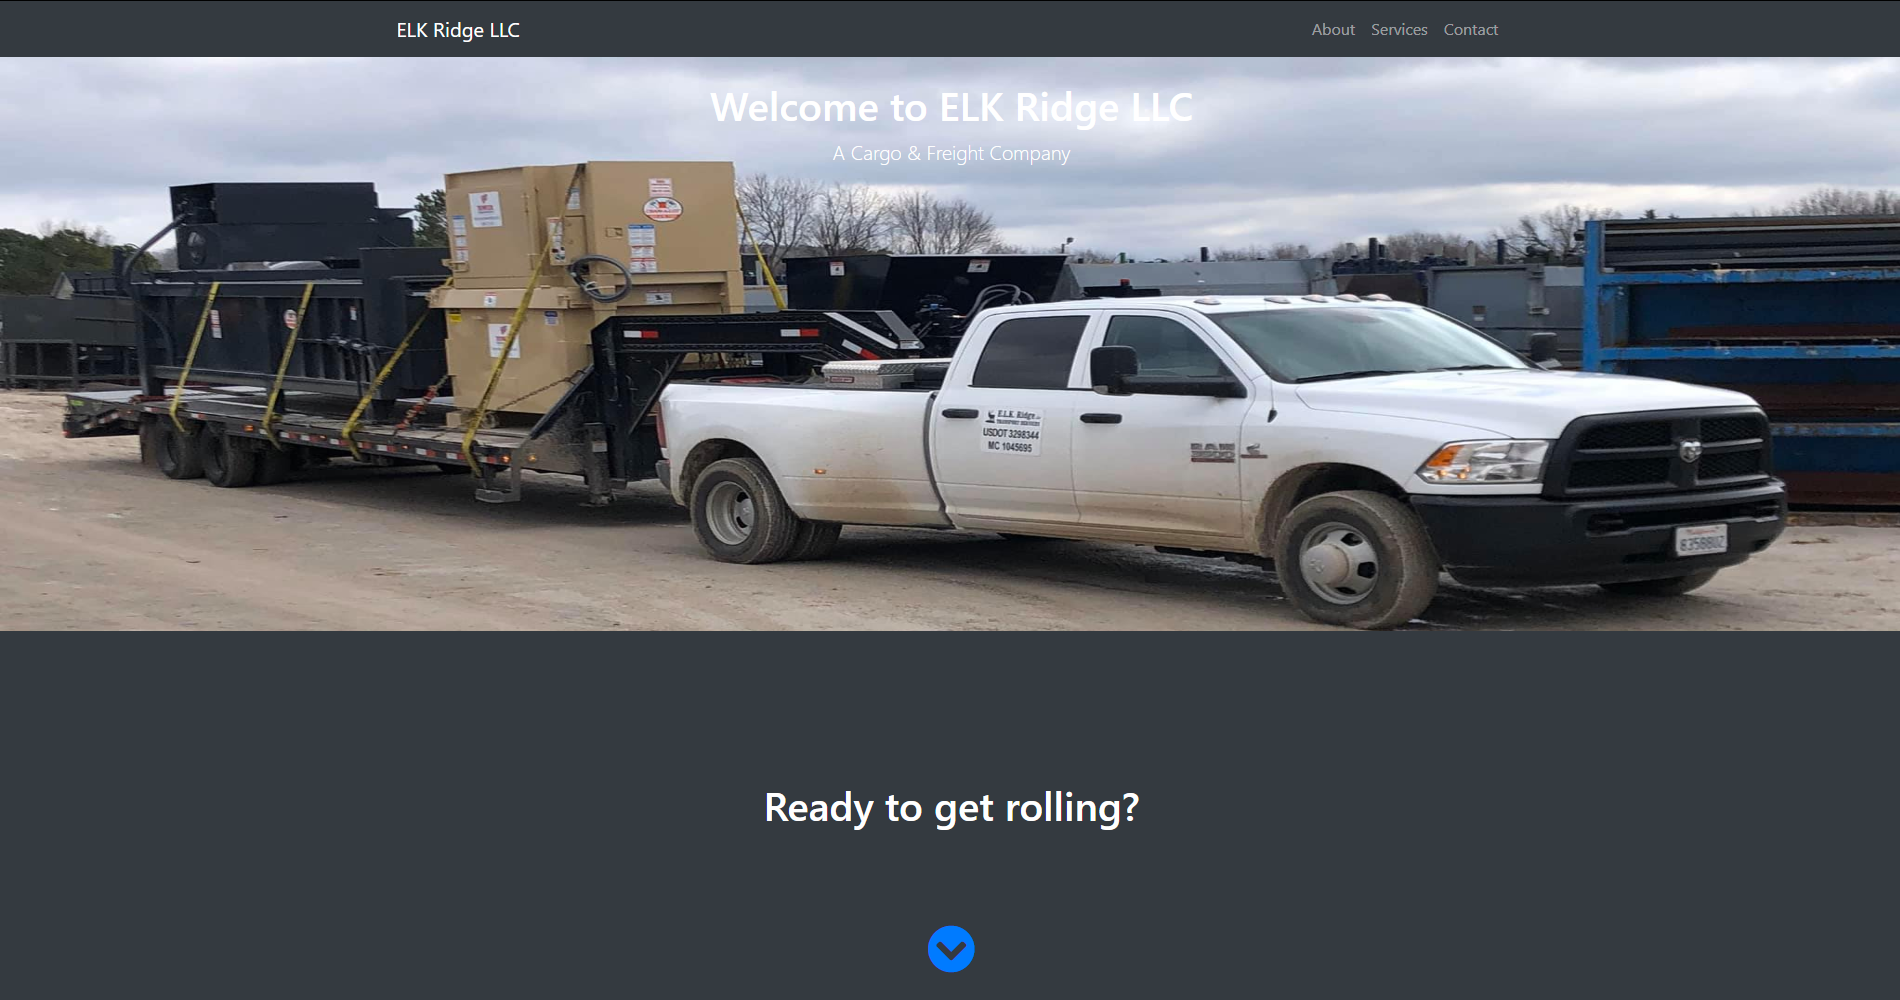 ELK Ridge LLC